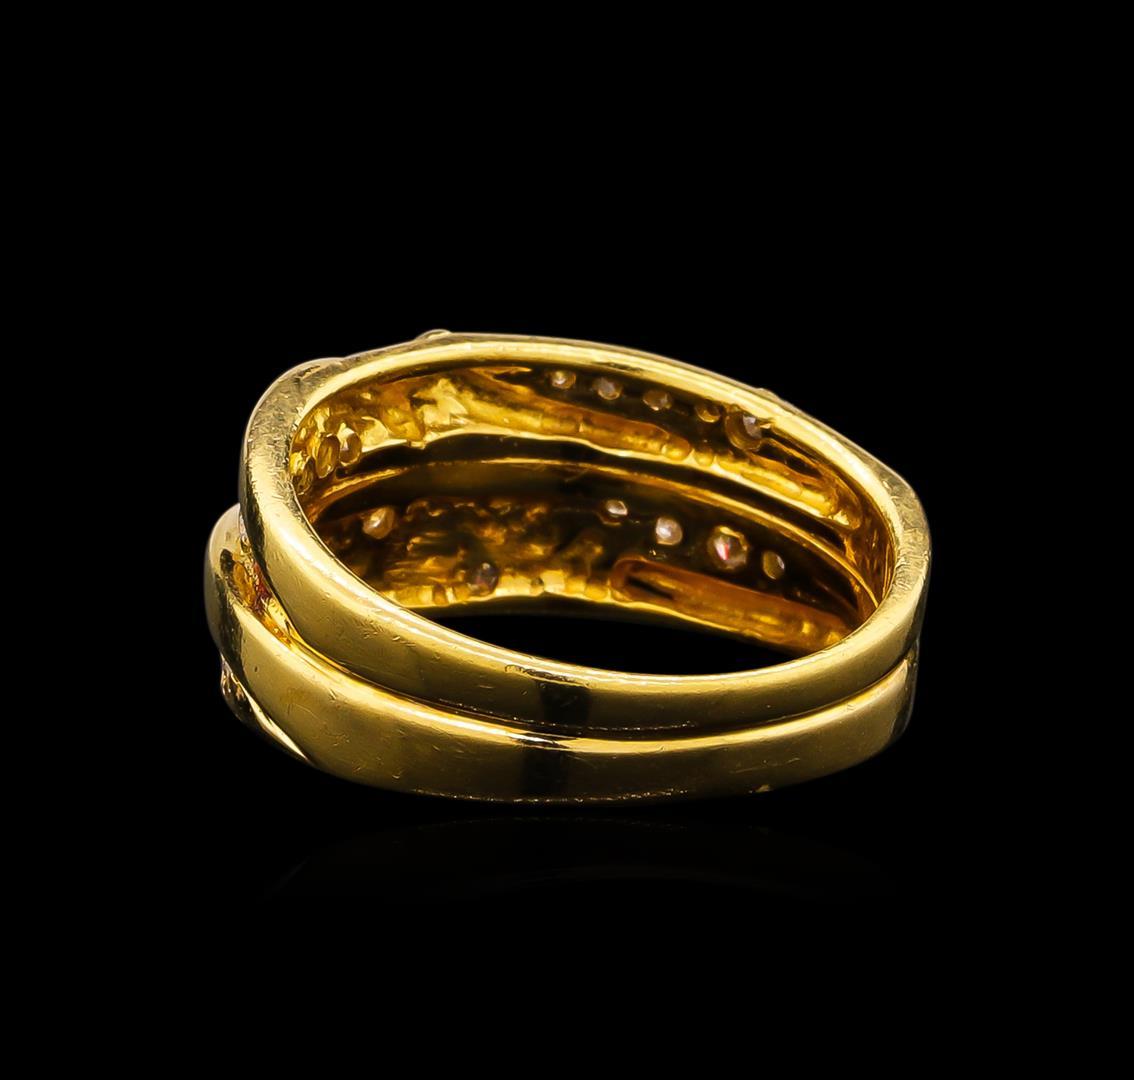 0.45 ctw Tanzanite and Diamond Ring - 18KT Yellow Gold